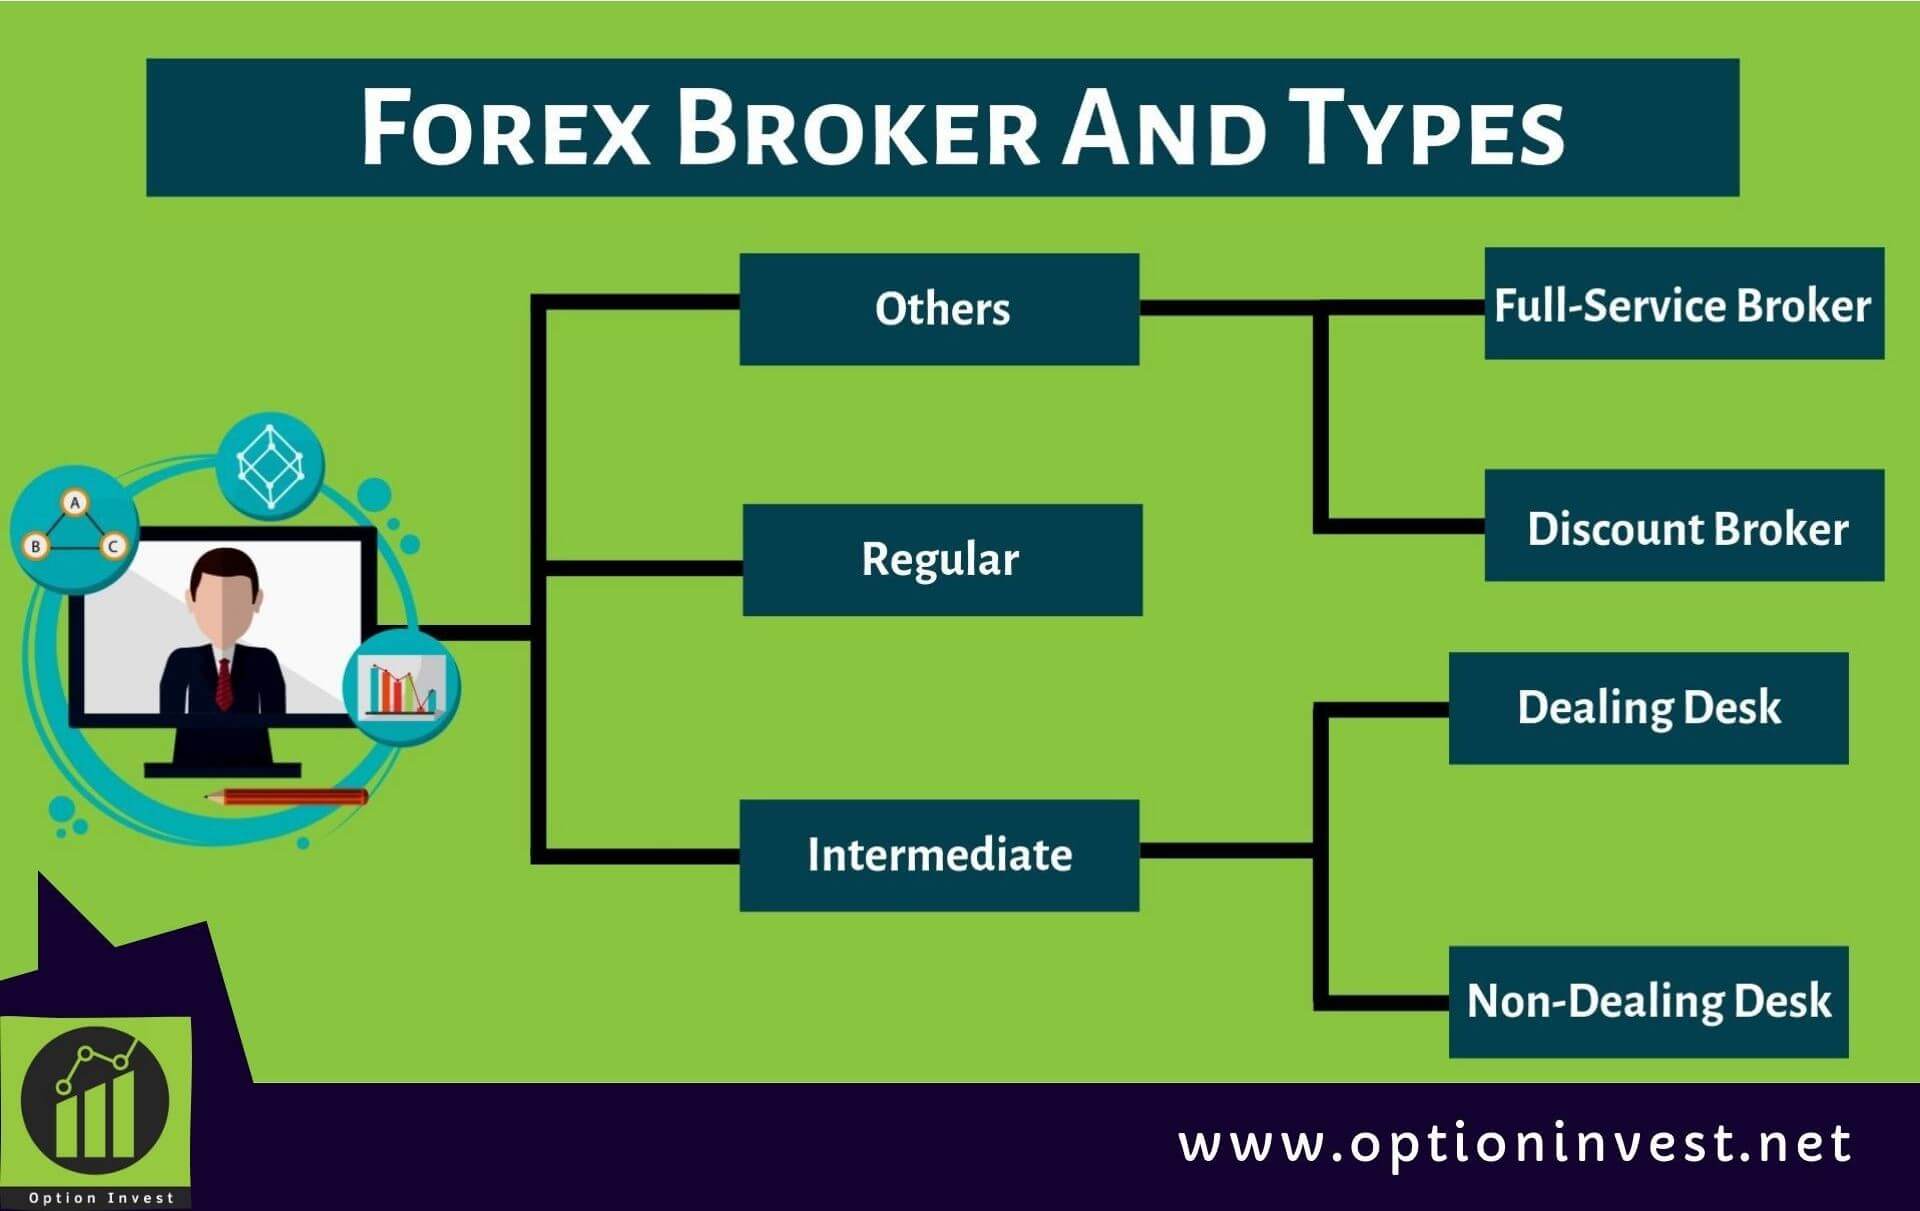 3. Exploring Hidden Costs in Forex Trading